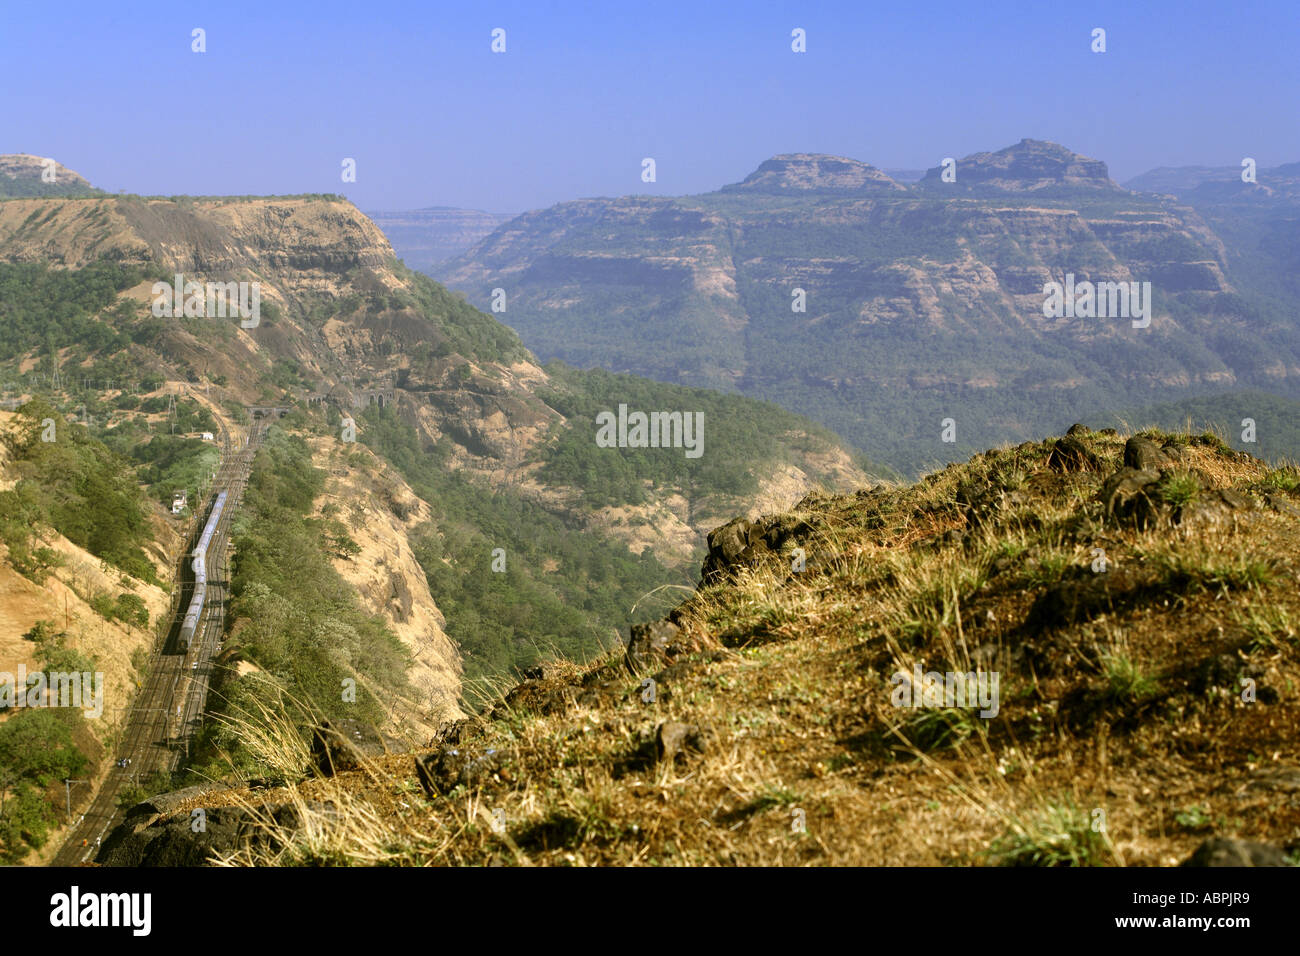 Western Ghats Deccan Plateau Zug in Richtung auf Hügel Berg Karjat Lonavala  Khandala Kalyan Maharashtra Indien Asien Asiatische Stockfotografie - Alamy